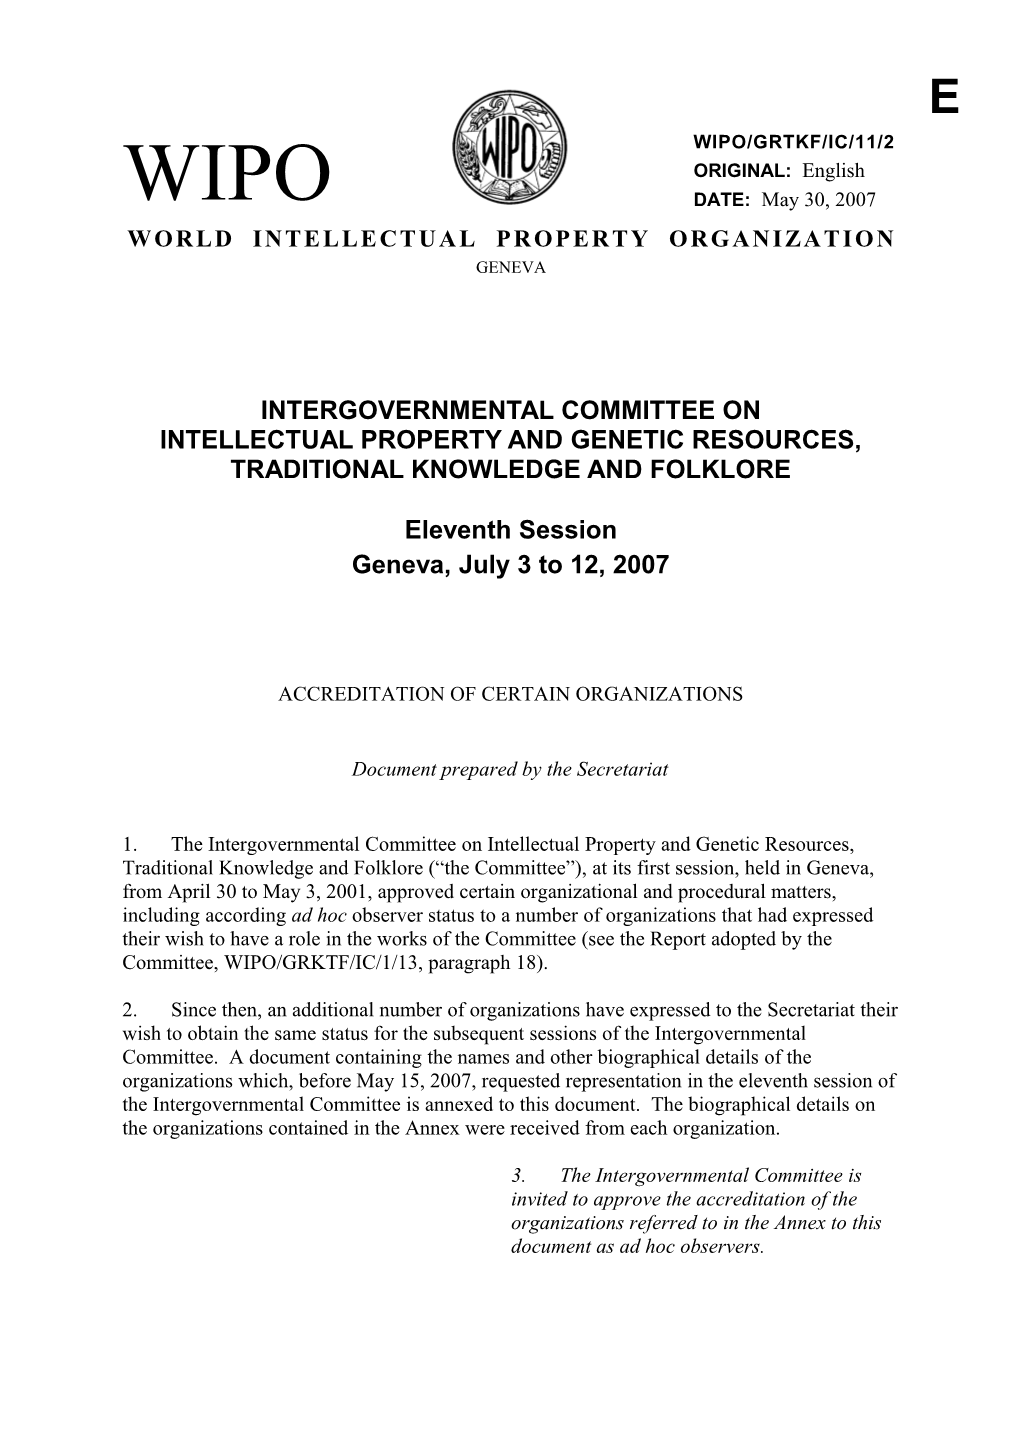 WIPO/GRTKF/IC/11/2: Accreditation of Certain Organizations